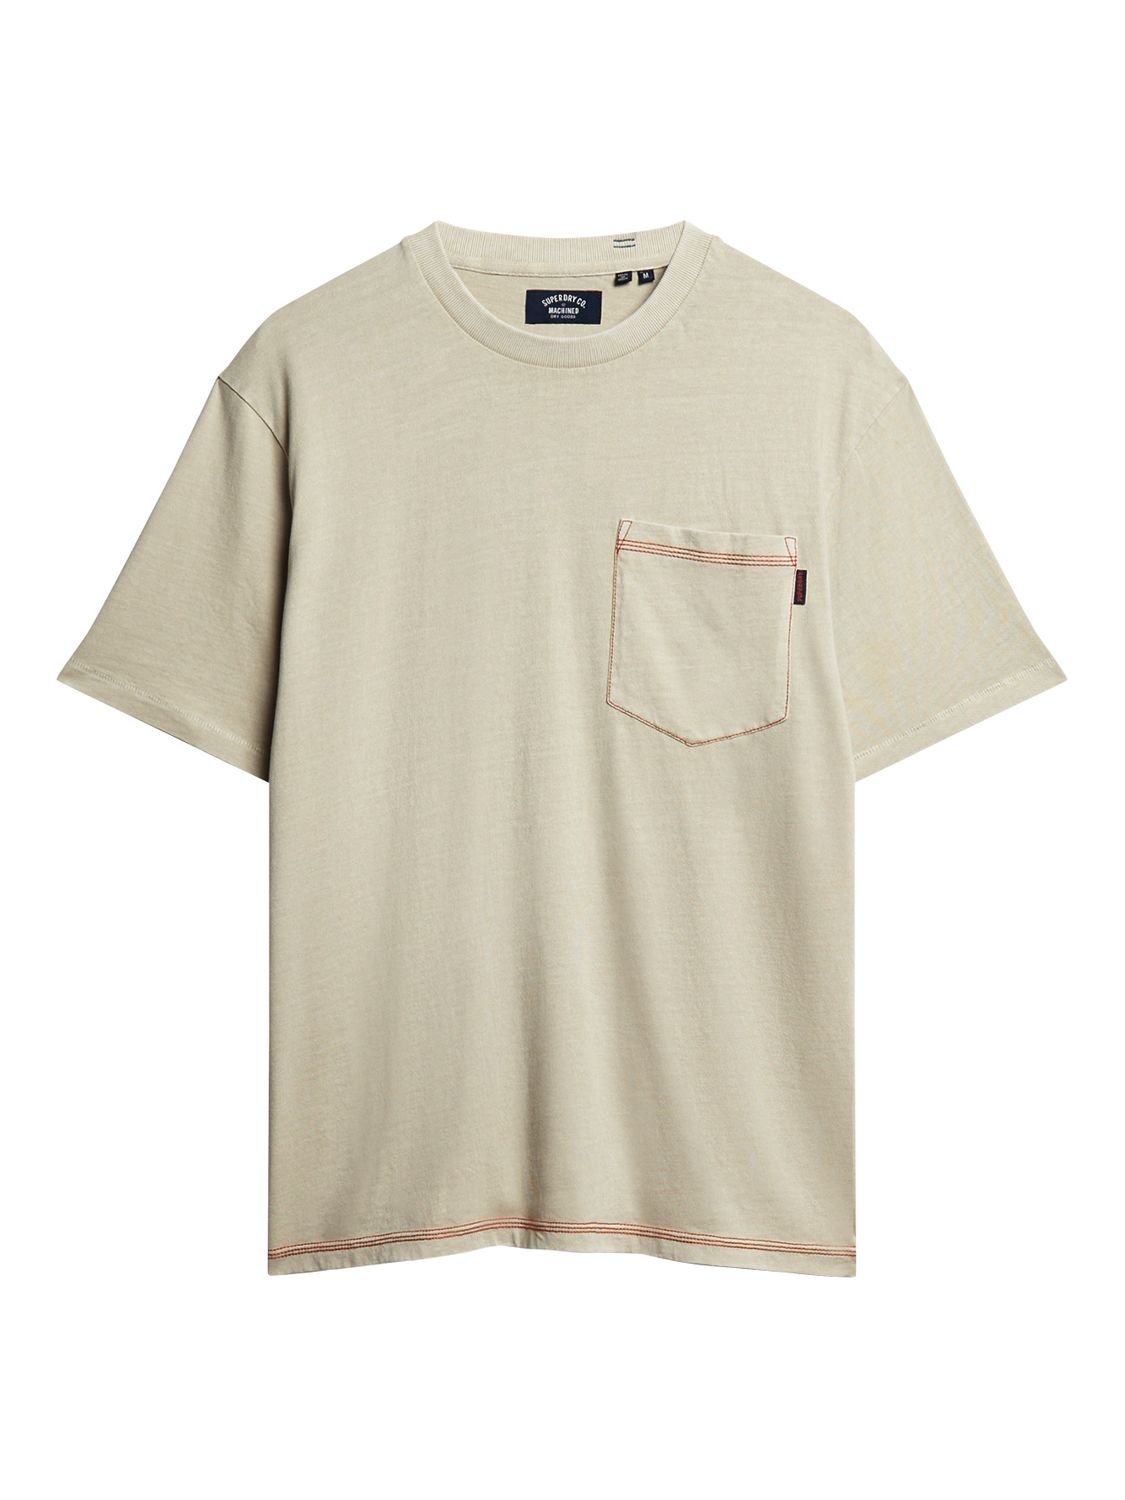 Superdry Contrast Stitch Pocket T-Shirt, Pelican Beige at John Lewis ...